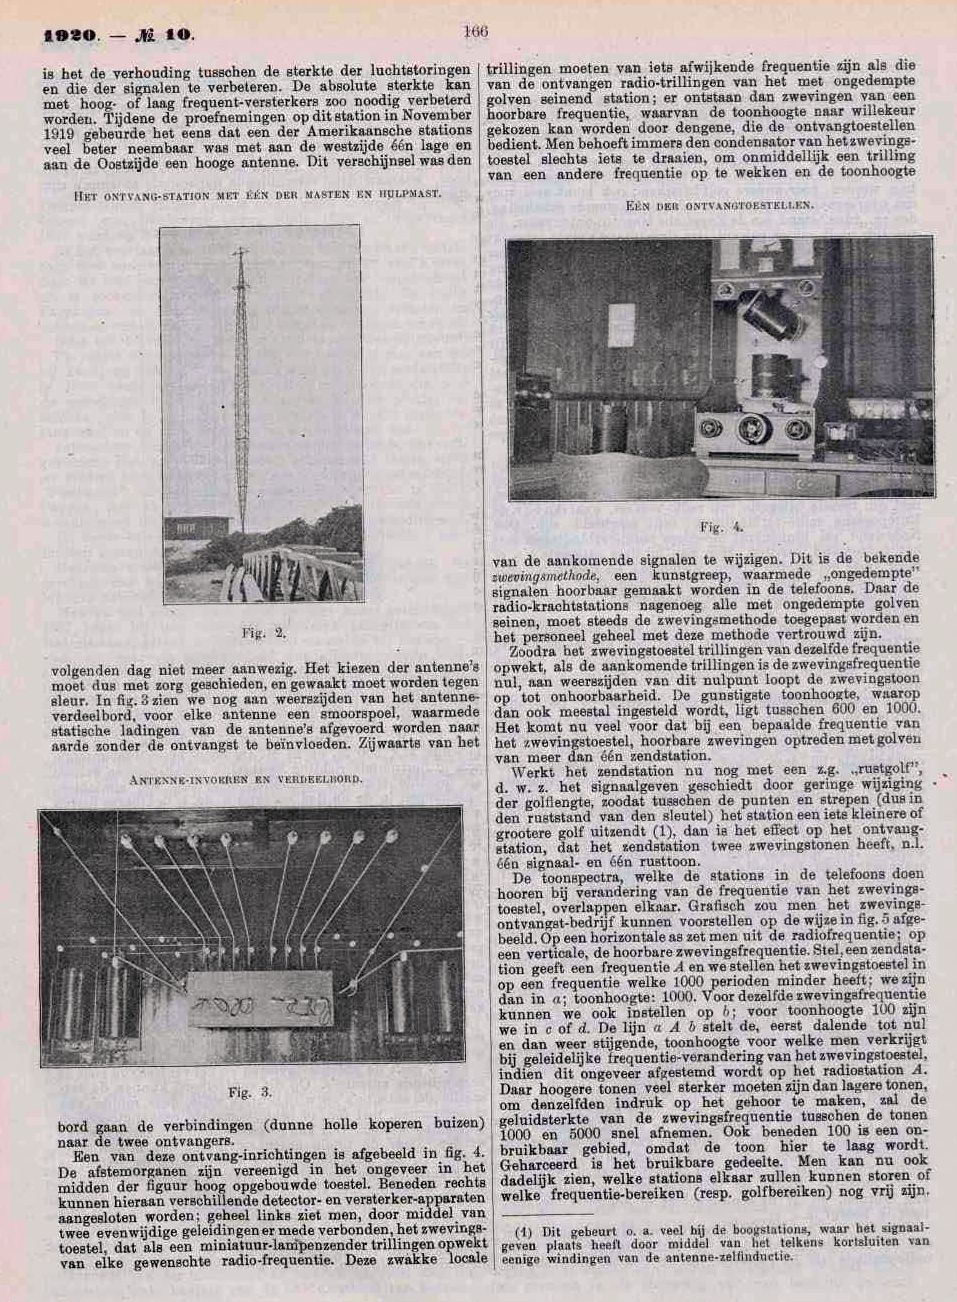 DeIngenieur06-03-1920-Sambeek-zenstation-dts 2961014 Pagina 3